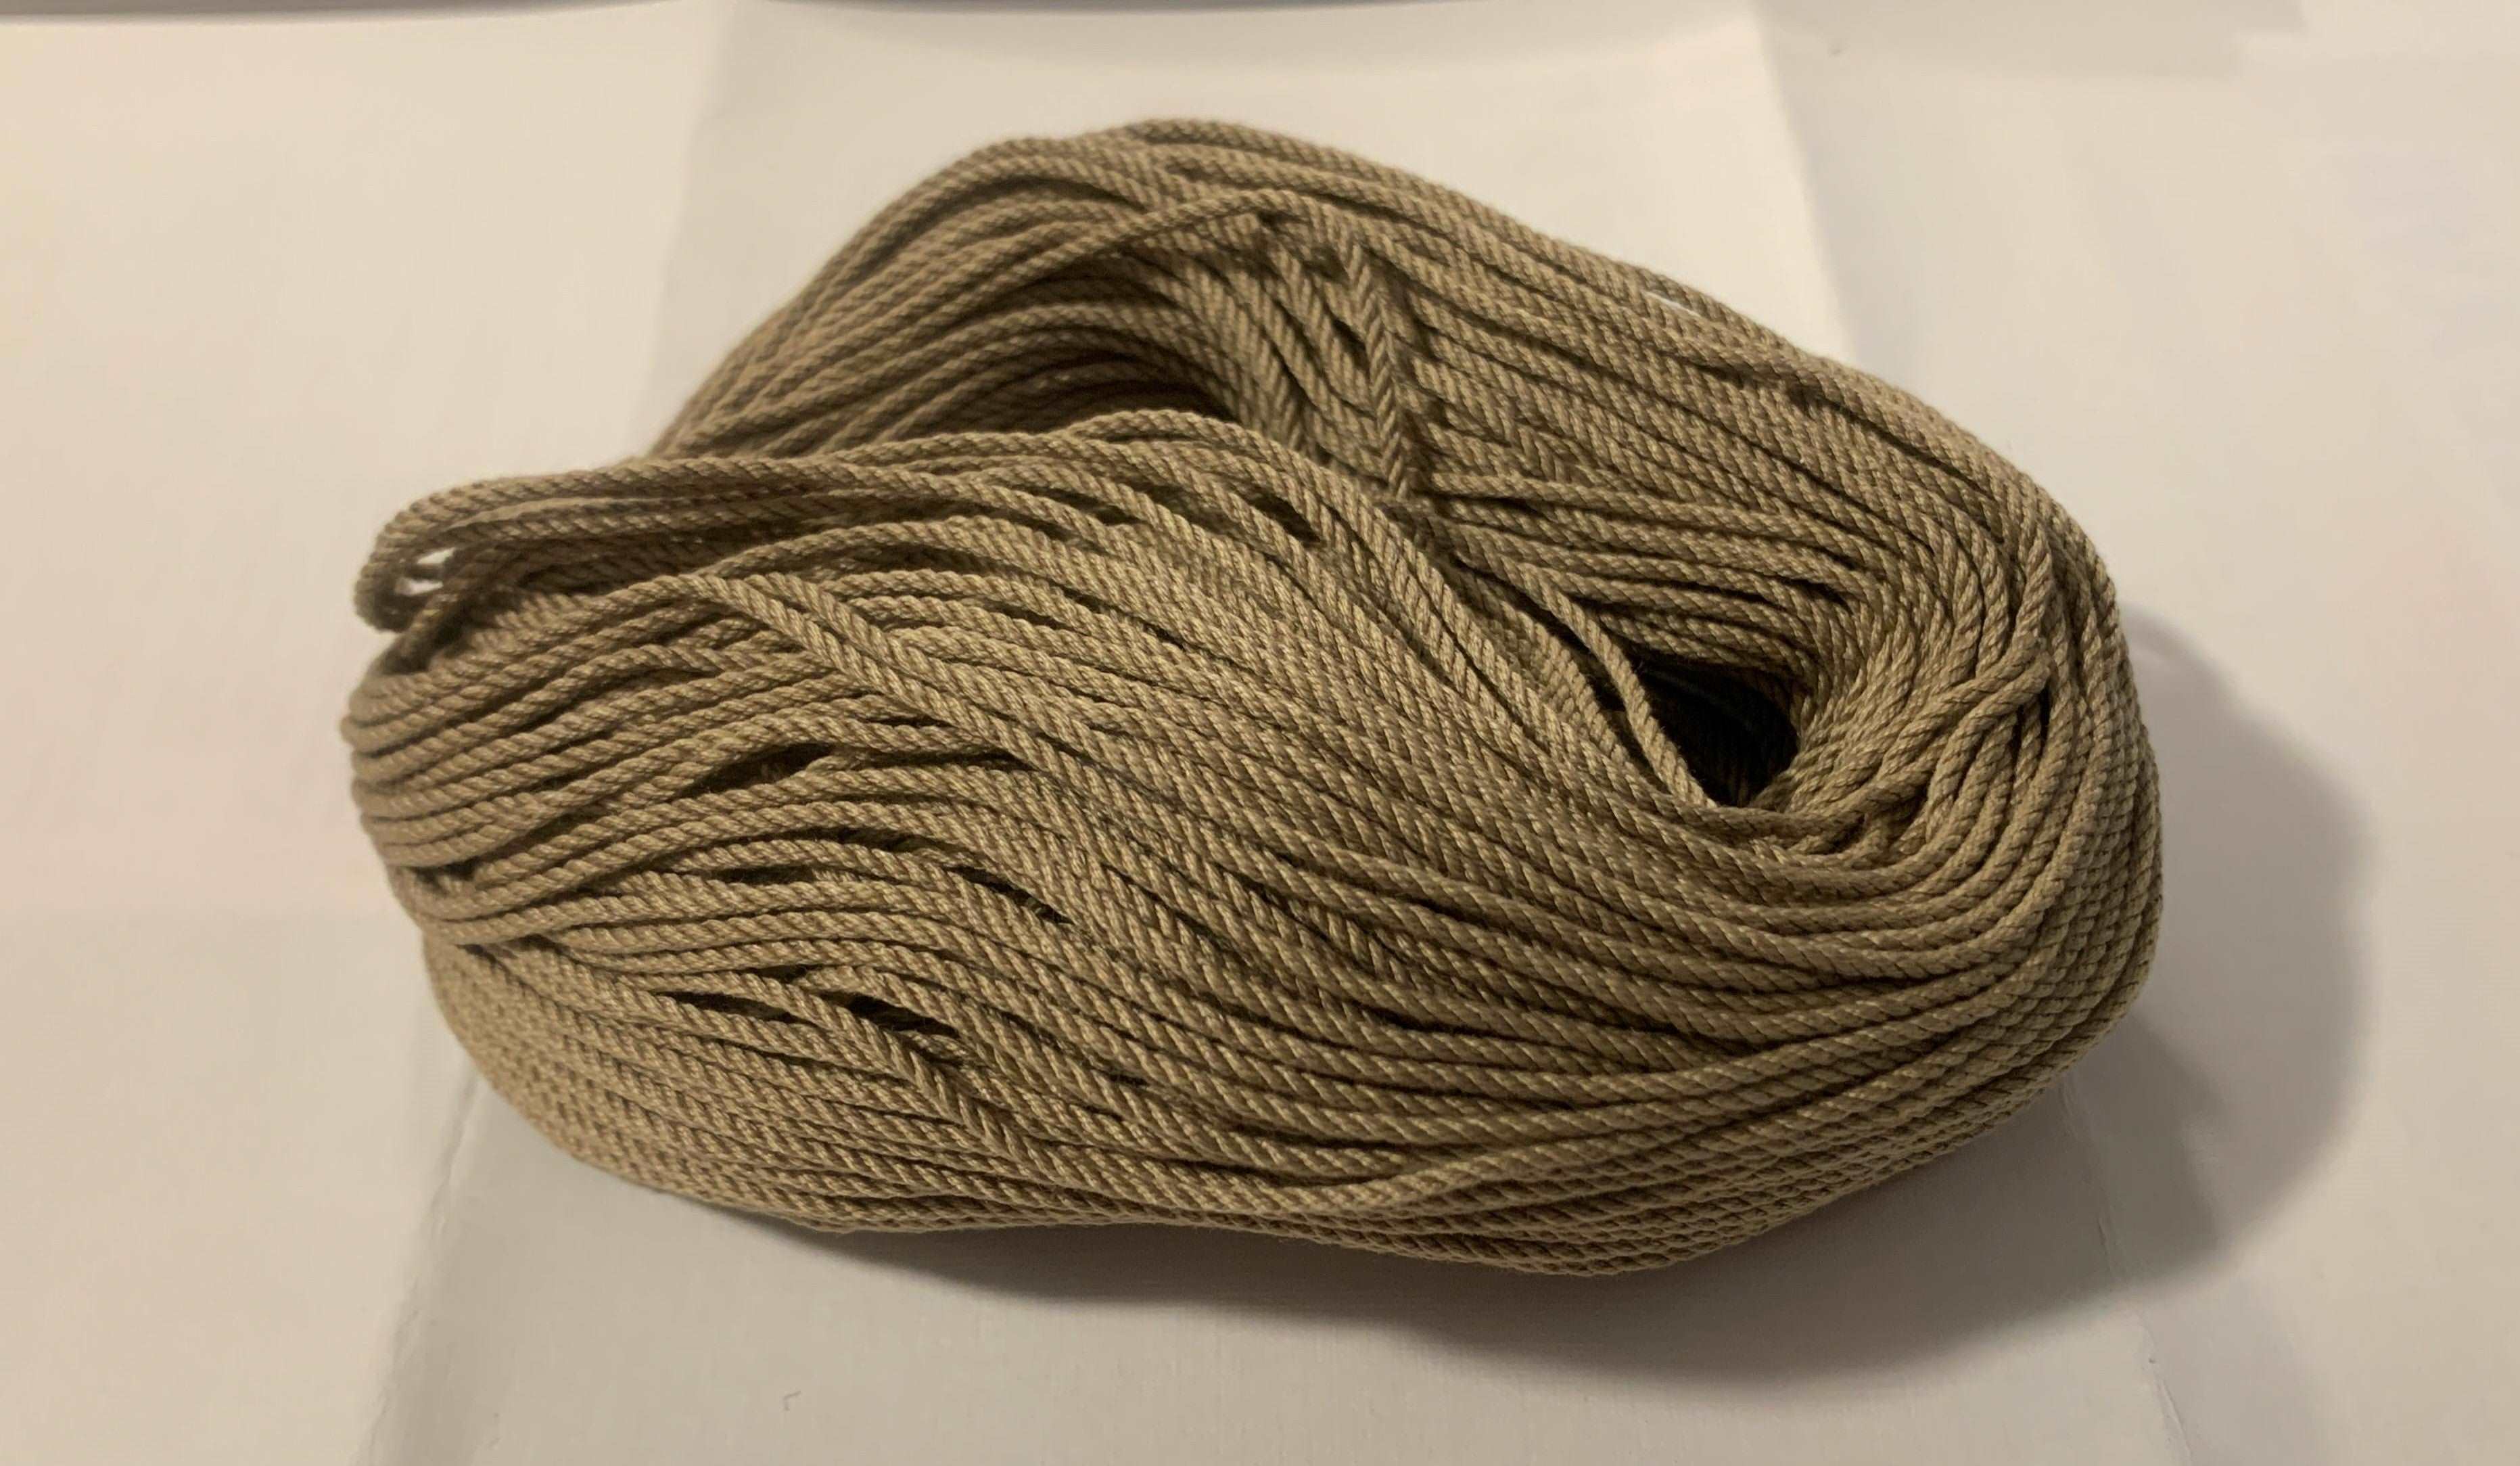 Miniature rigging rope 1.3 mm, Beige, cotton, 6 meter – Dry-Dock